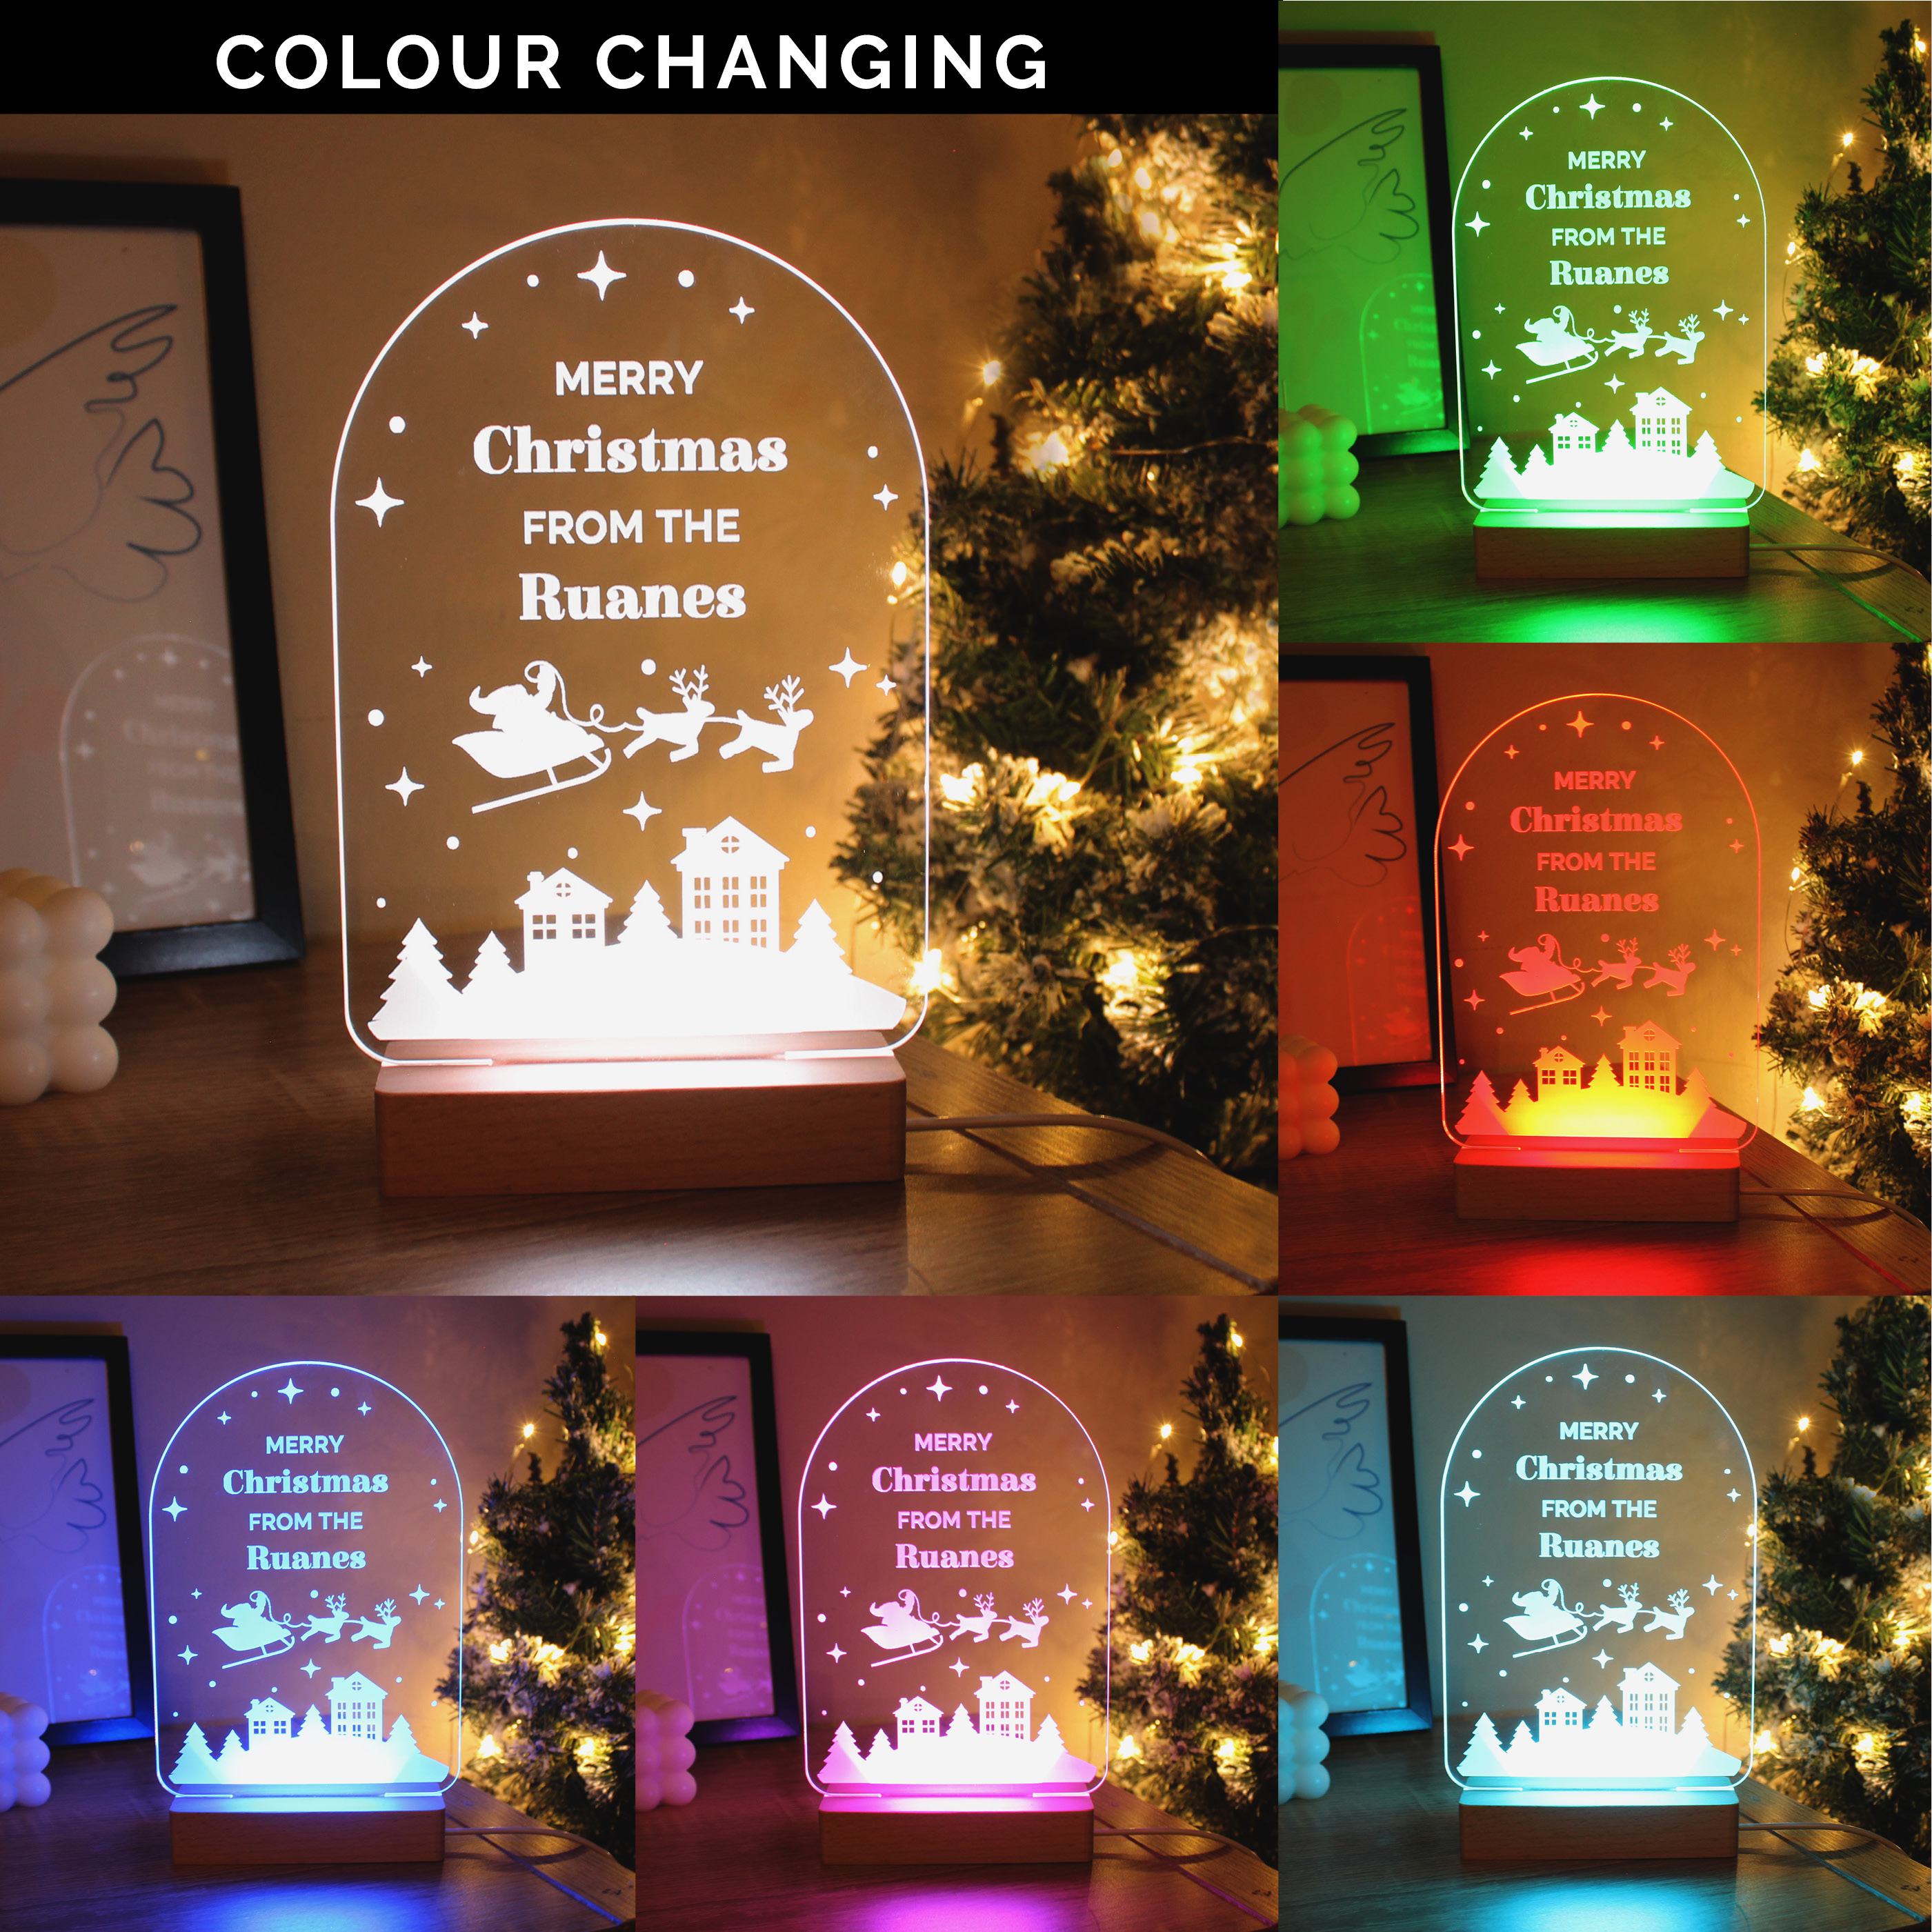 Personalised Christmas Wooden Based LED Light